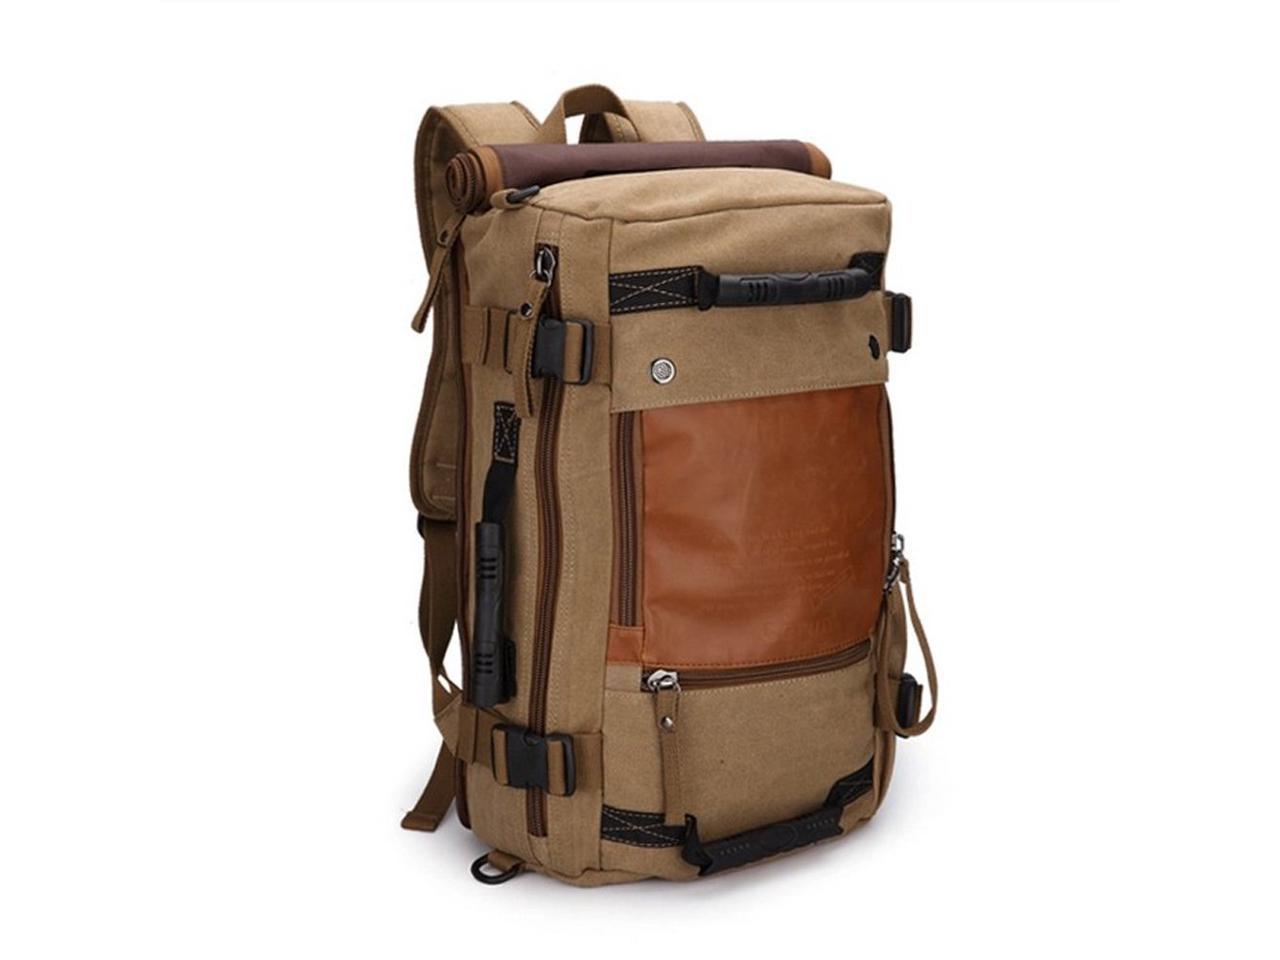 KAKA Canvas Travel Duffel Bag Camping Hiking Backpack Rucksack Laptop Bags - 0